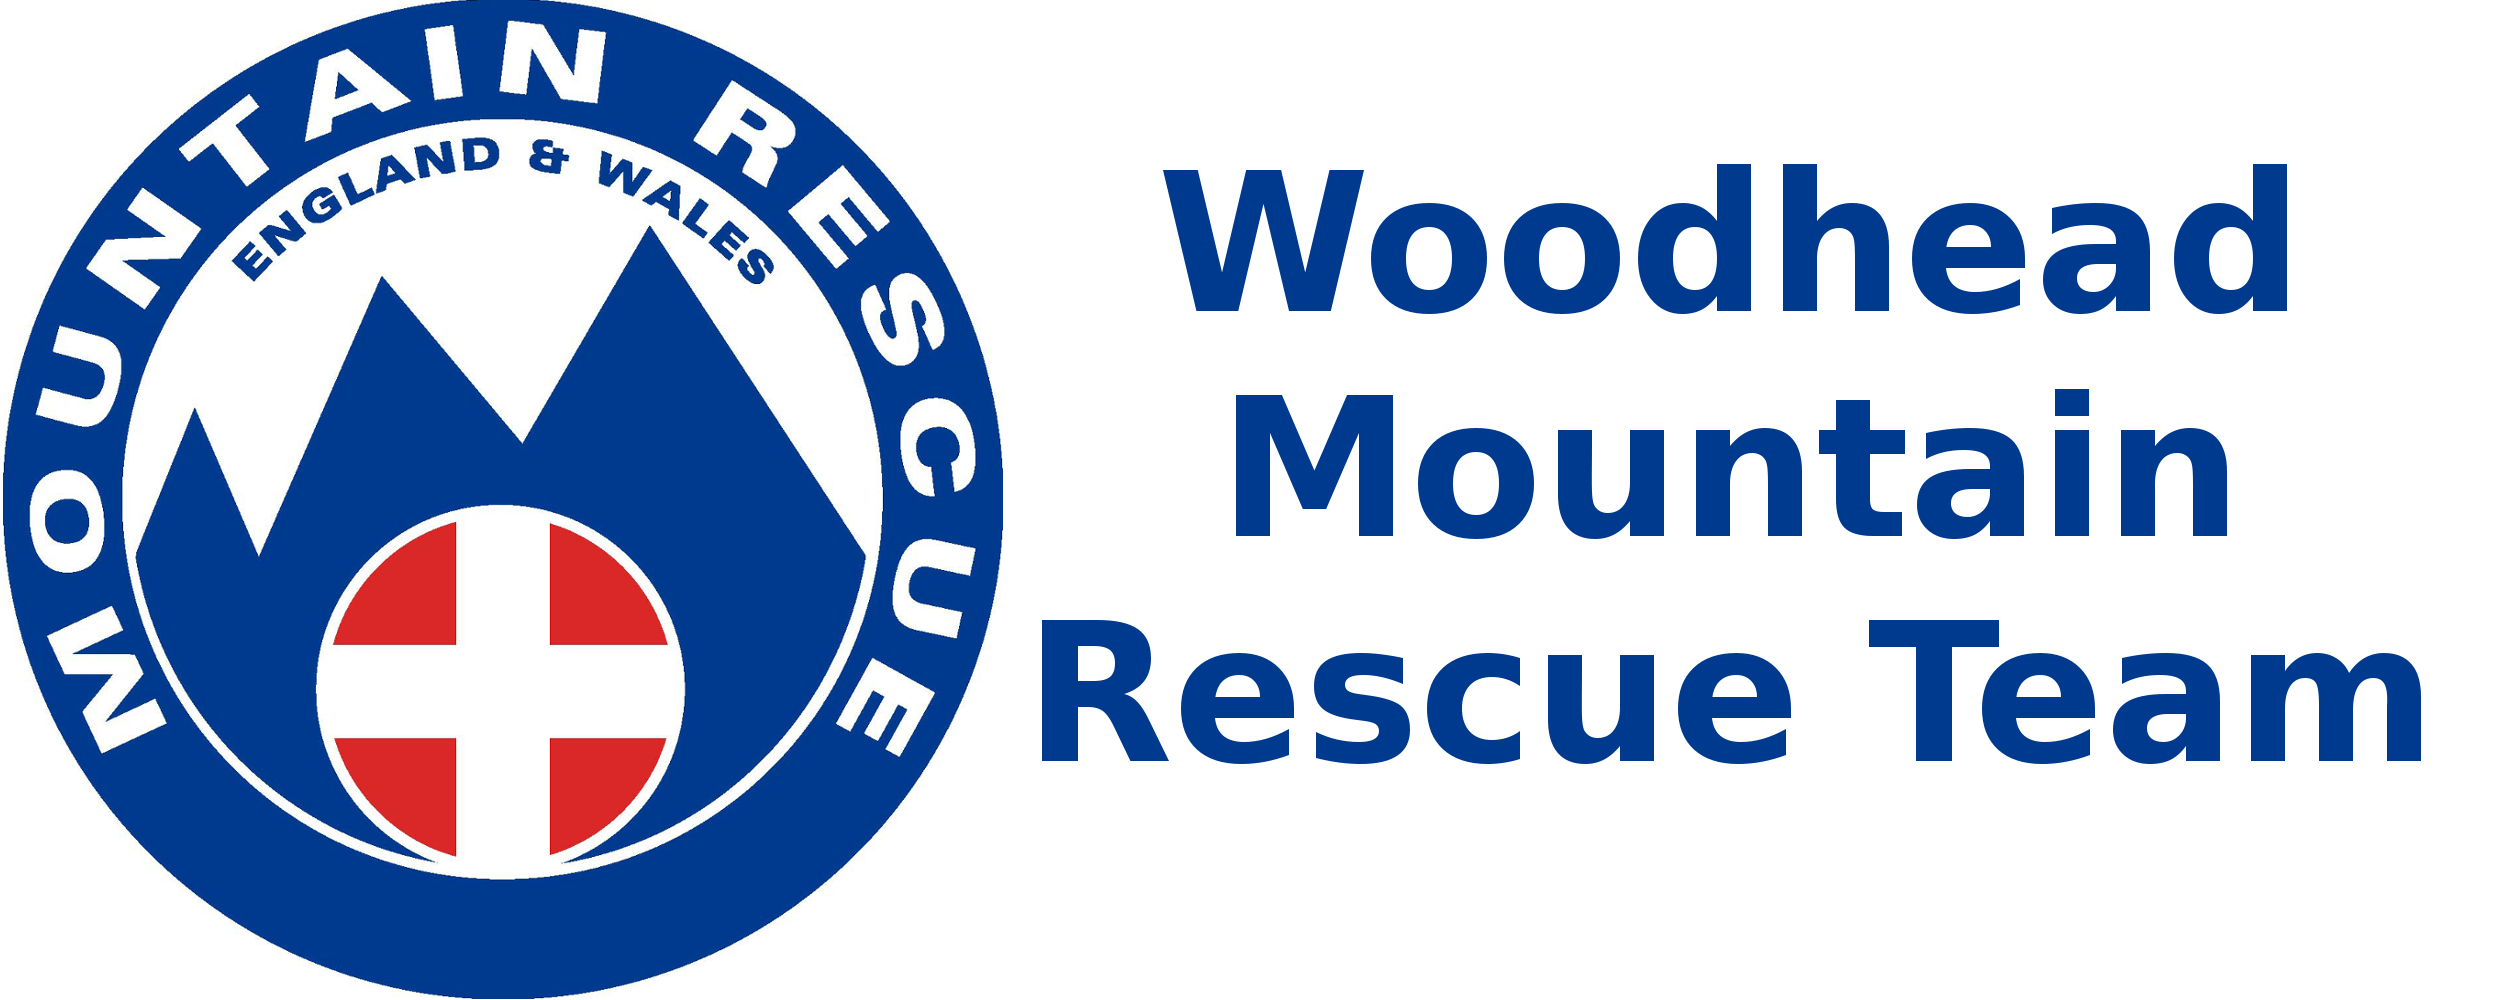 Woodhead Logo - Woodhead Mountain Rescue Team – TO CALL MOUNTAIN RESCUE DIAL 999 ...